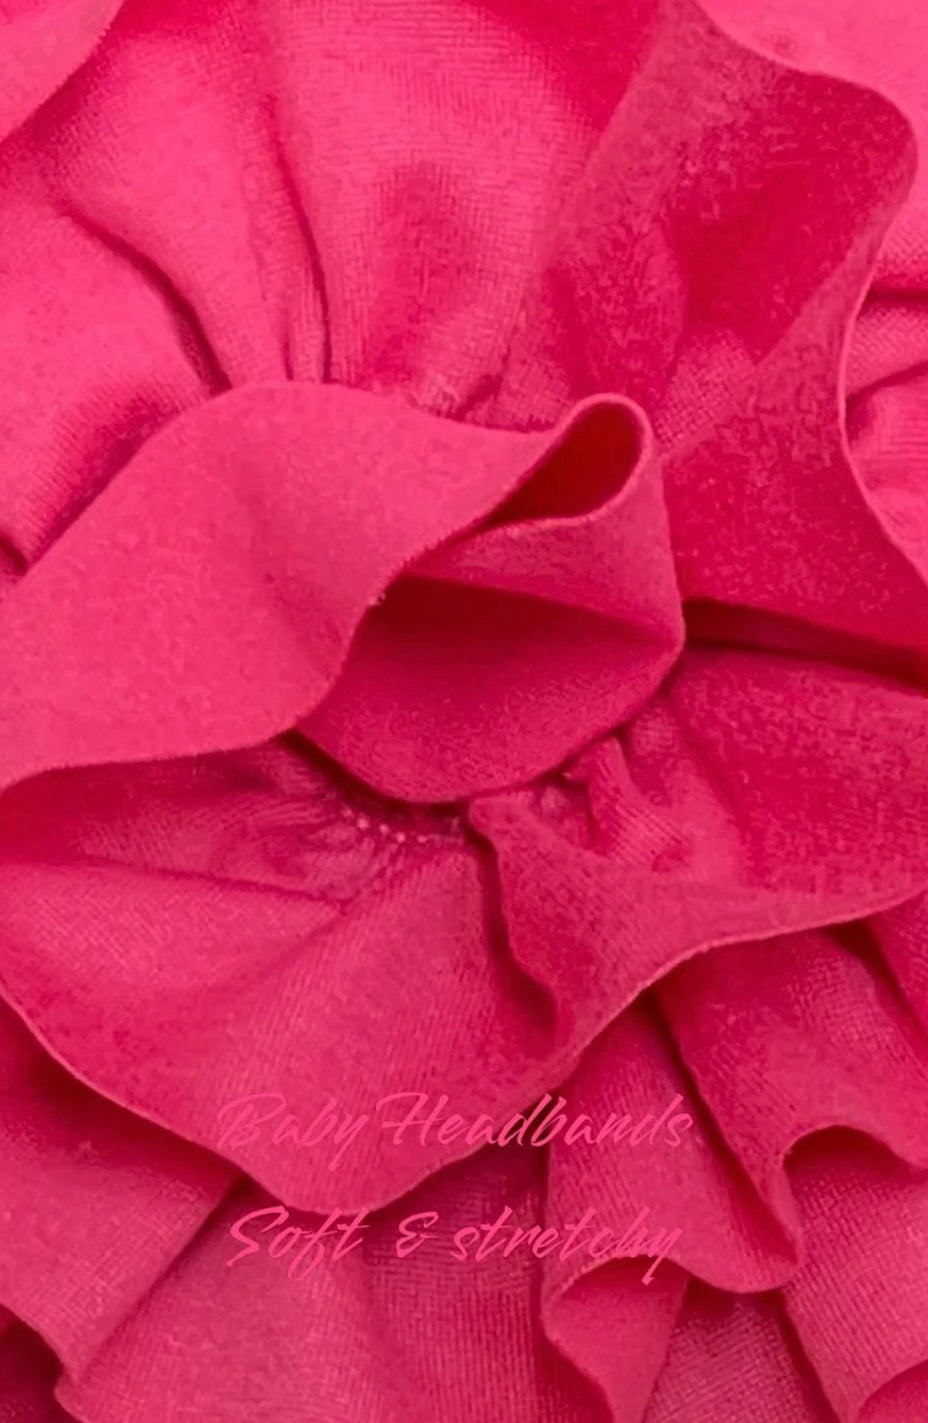 5” Flower Baby Headband in Hot Pink